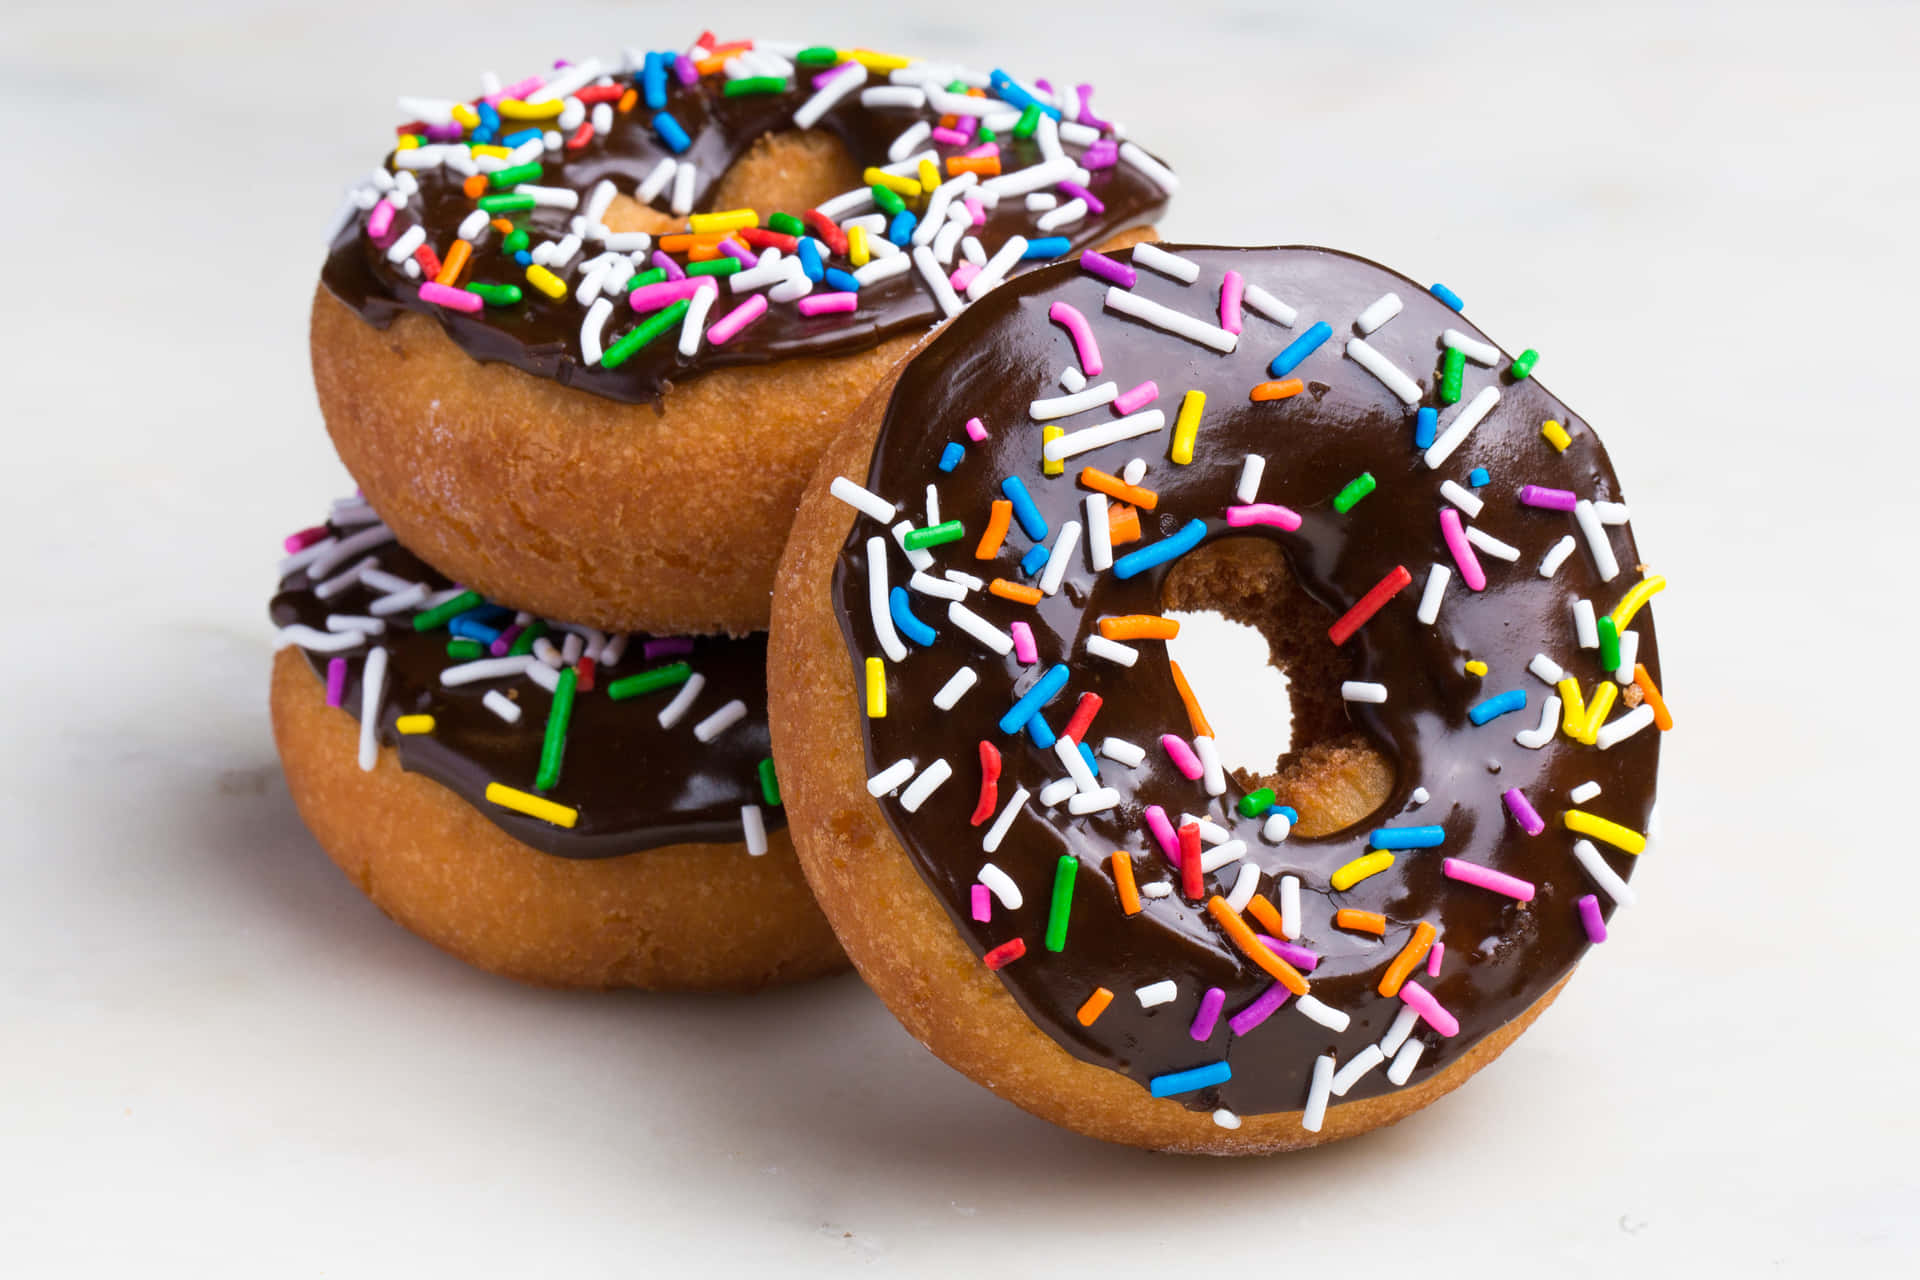 Three Chocolate Glazed Donuts With Sprinkles